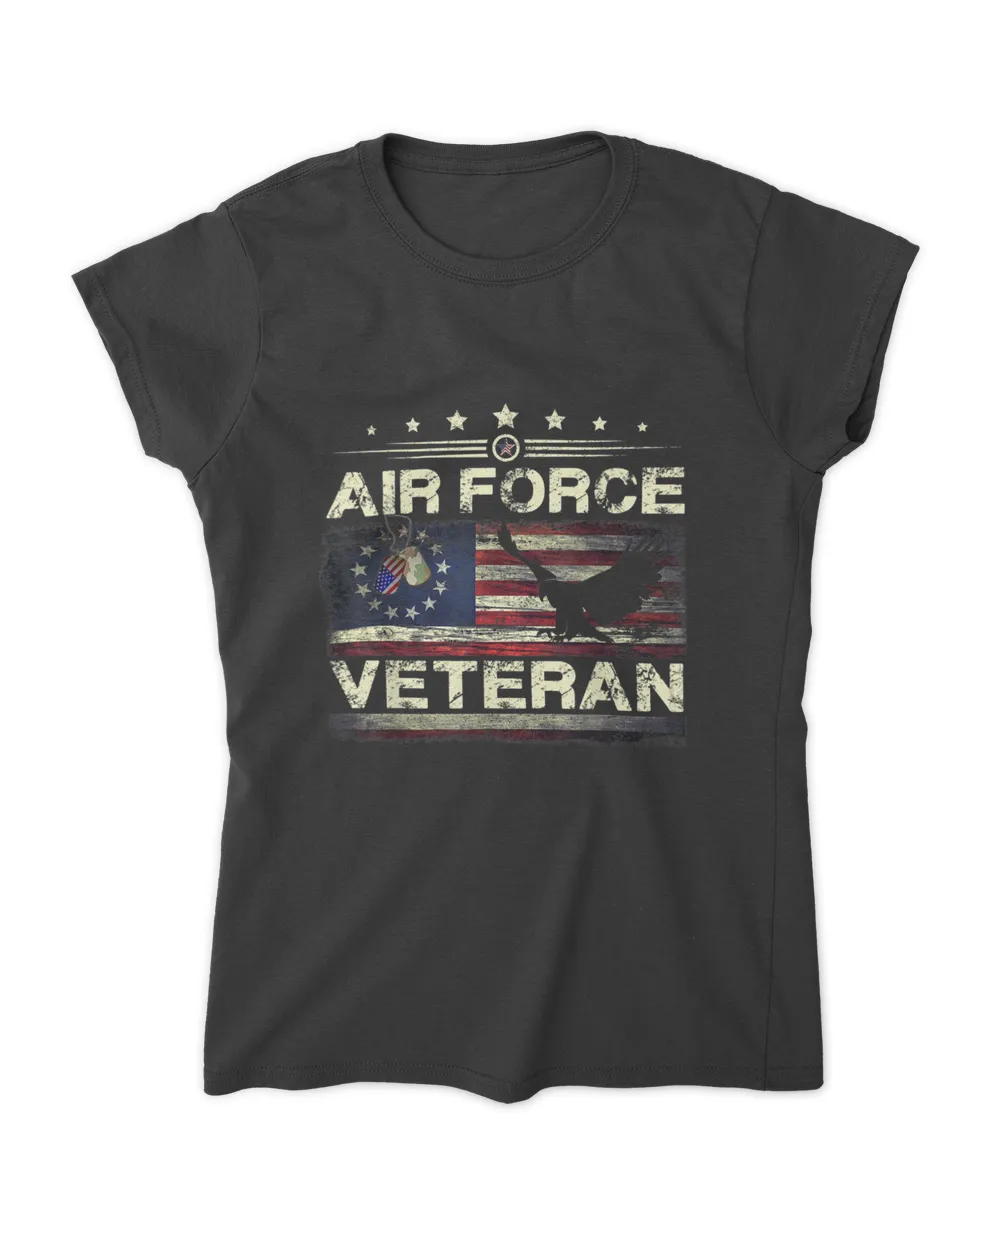 Veteran US Air Force Tshirt - American Betsy Ross Flag